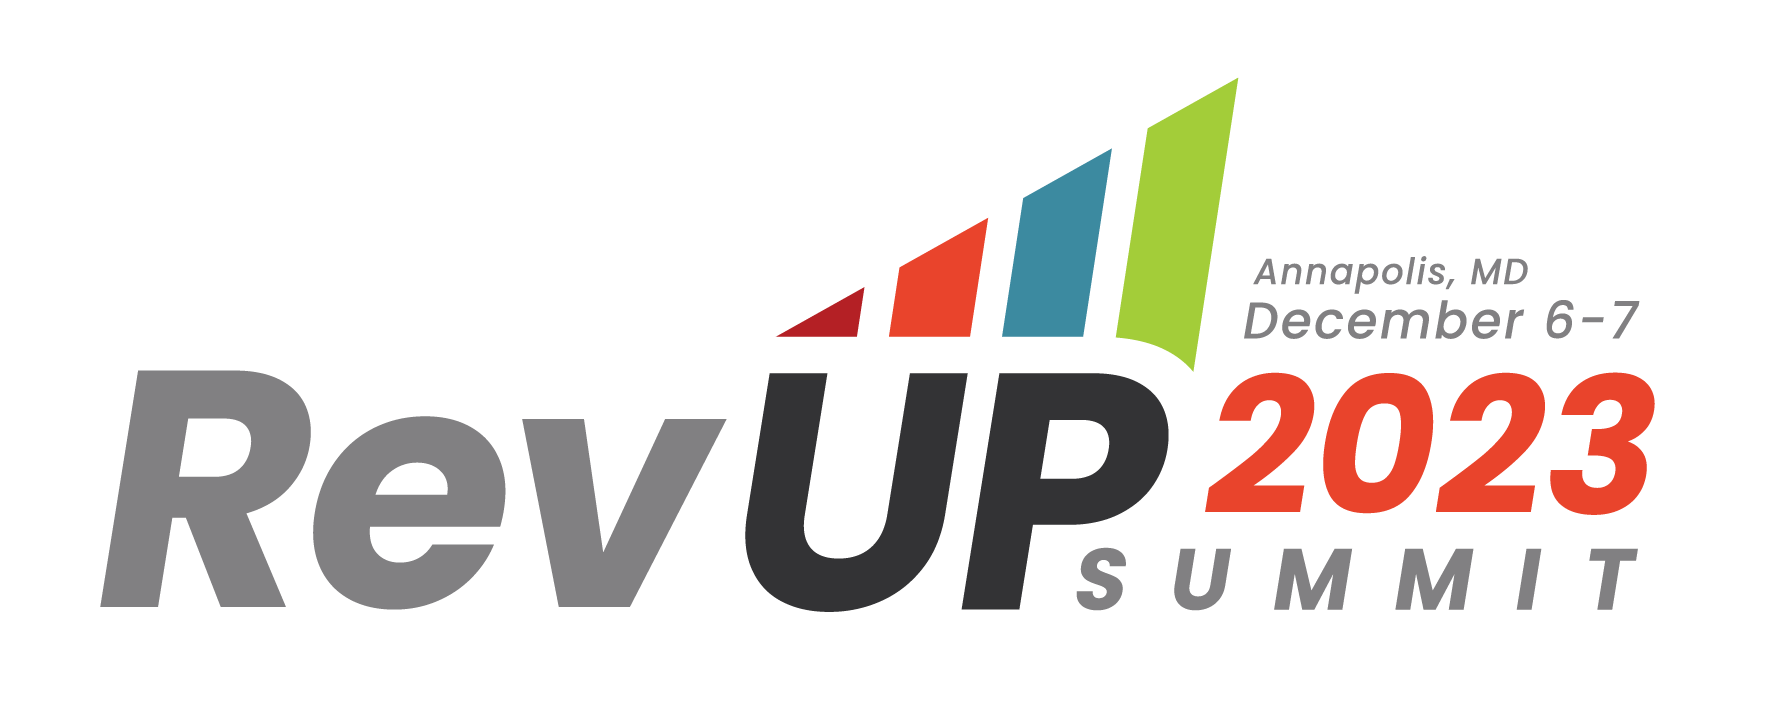 logo-RevUP-2023-notag